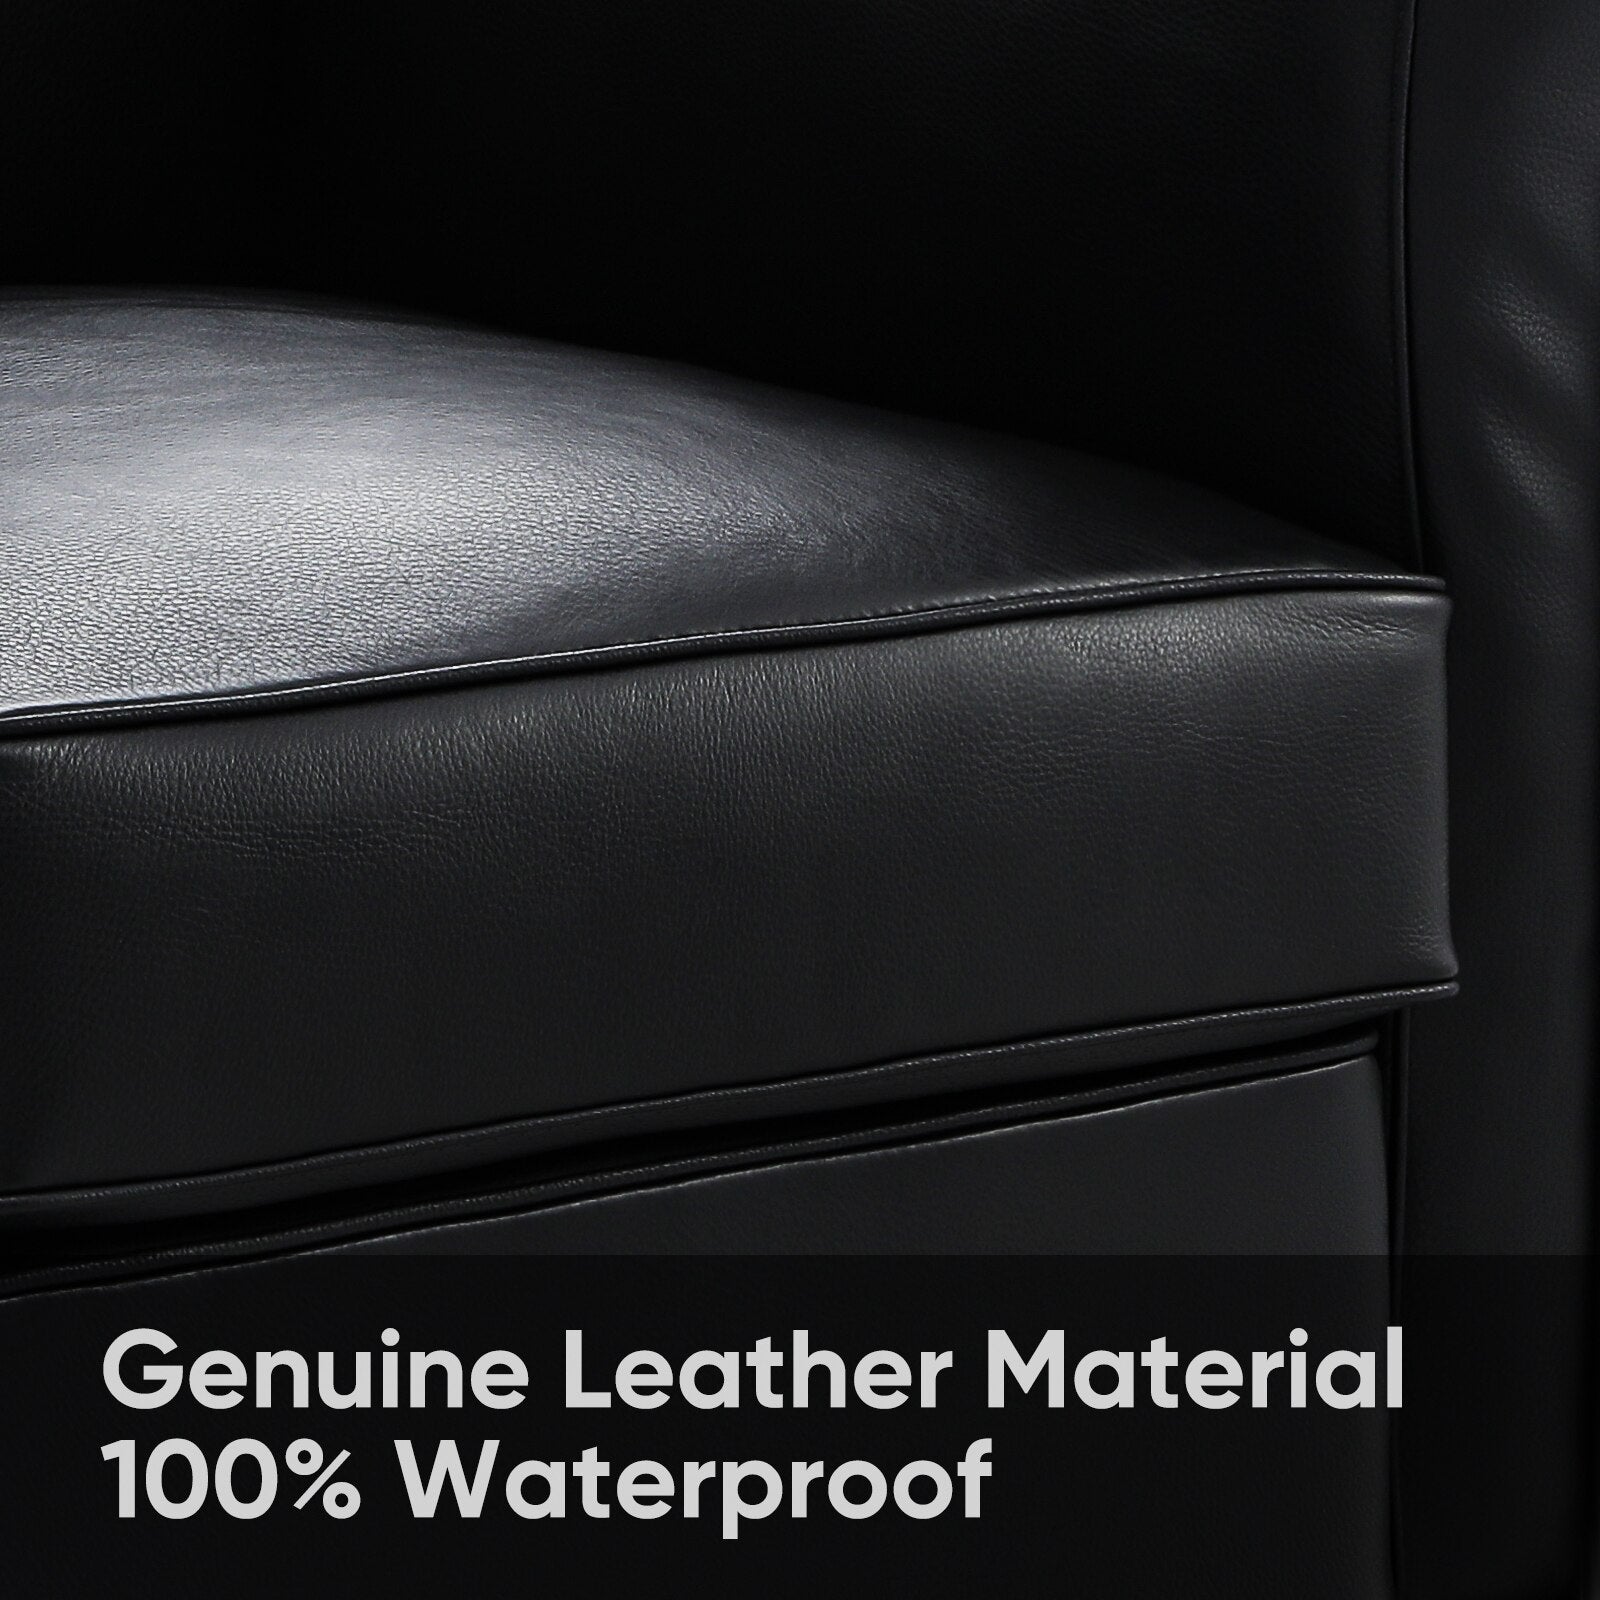 Arthia Designs - LC2 Genuine Italian Leather Sofa by Le Corbusier - Review